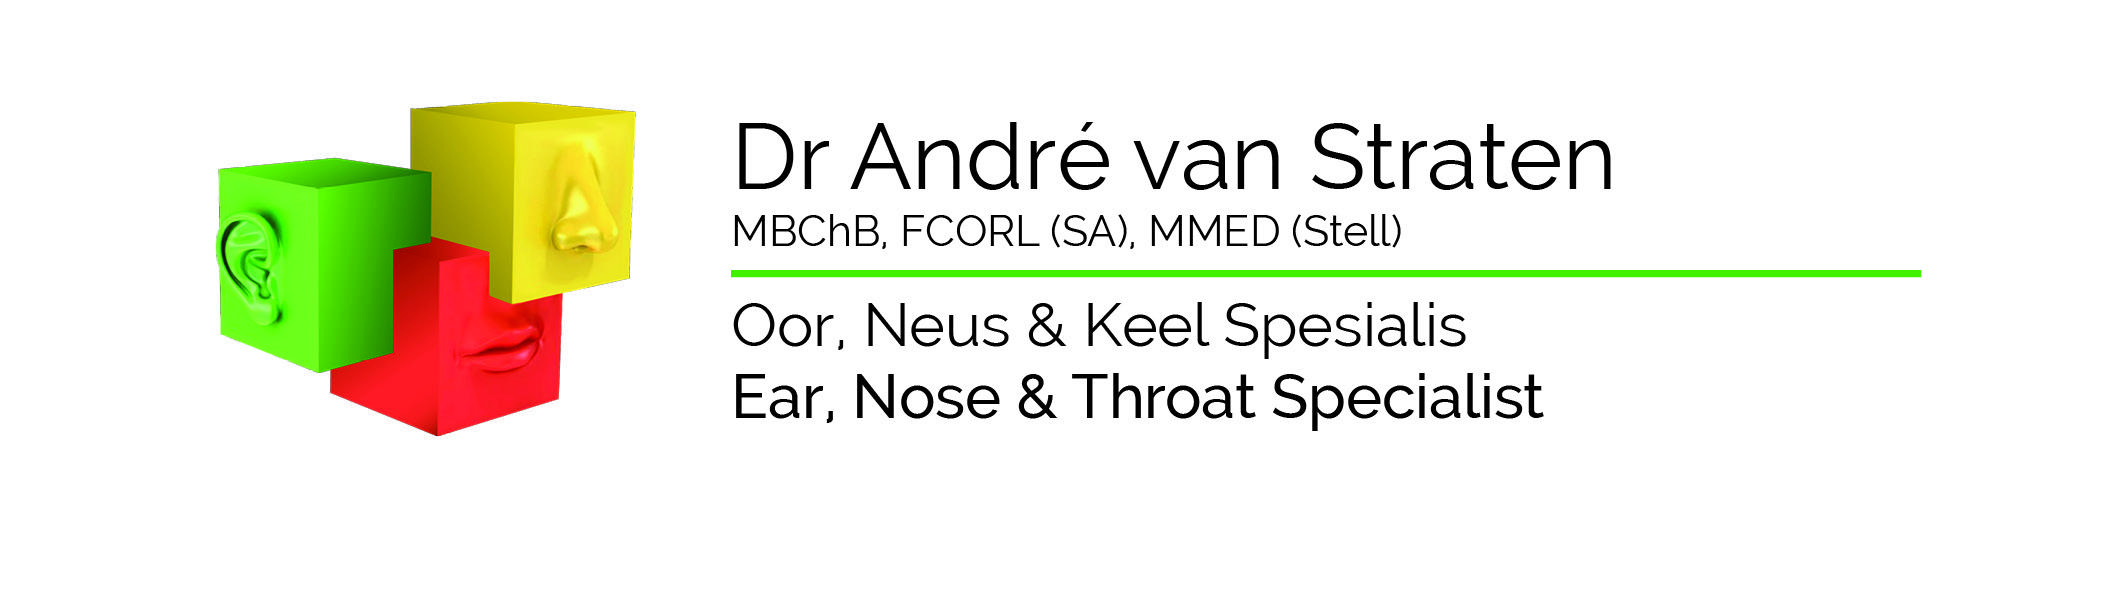 Dr Andre van Straten Logo